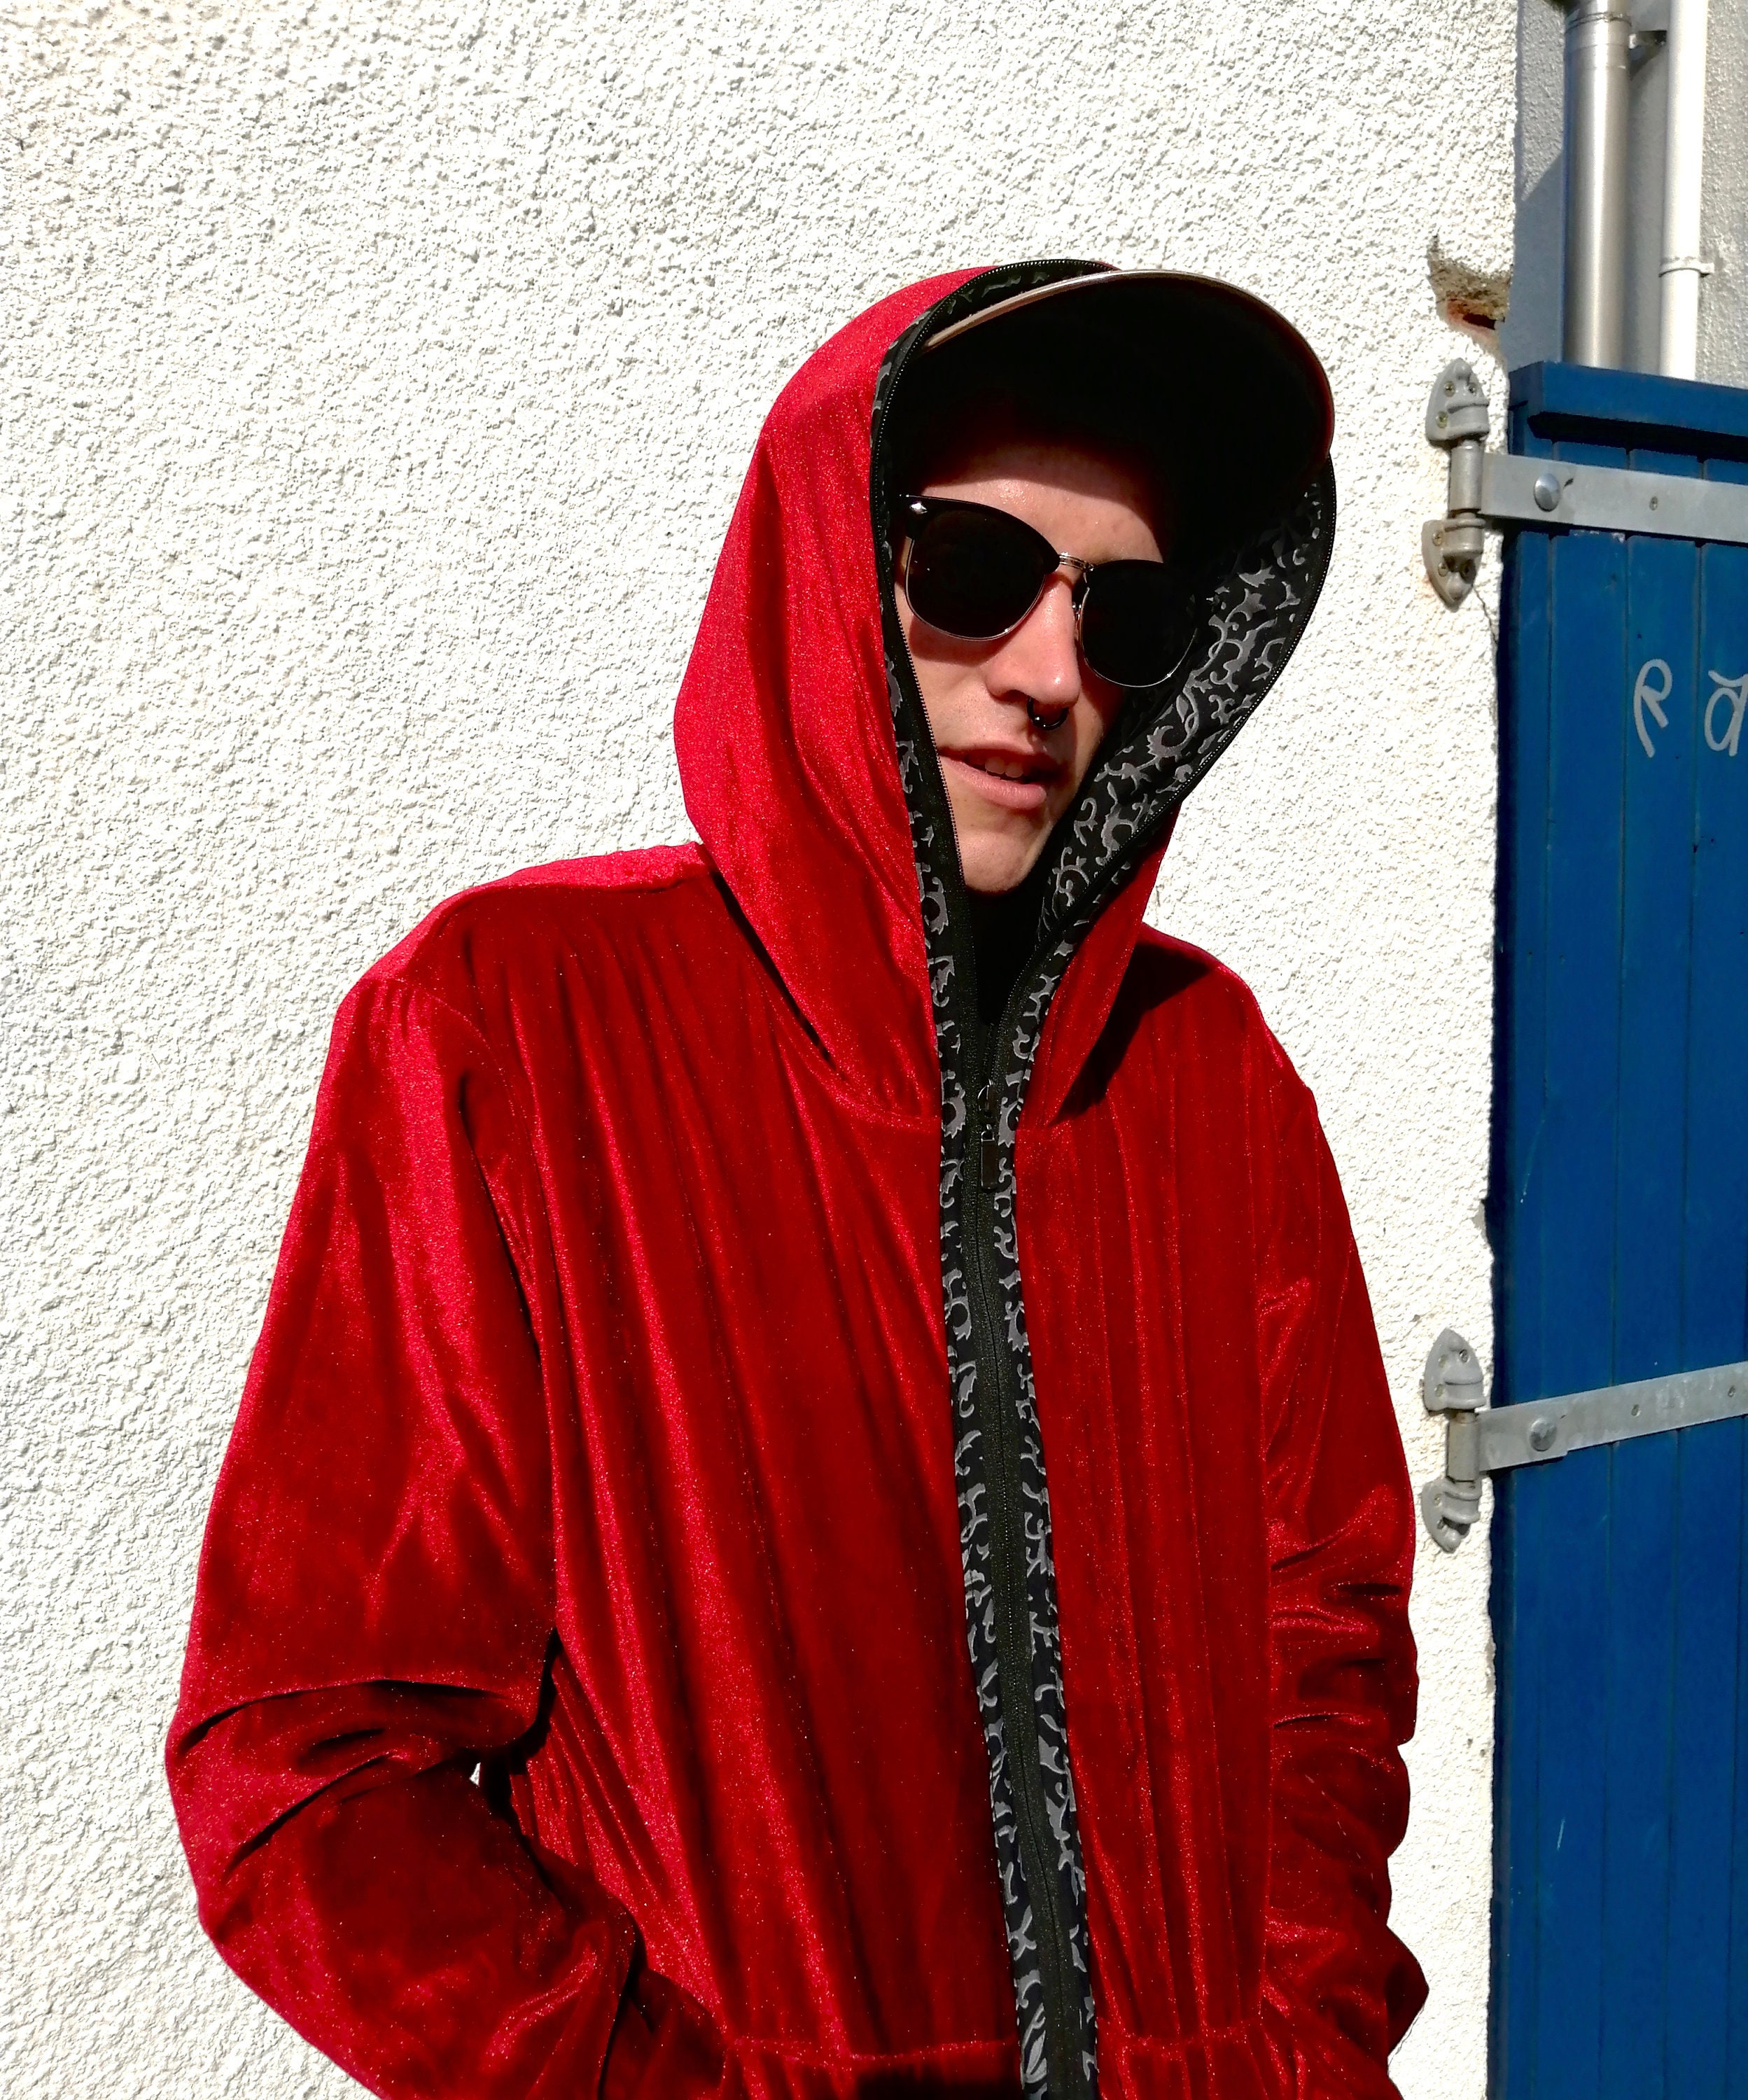 humane skulder Perth Blackborough Red Velvet Shell Suit Hoodie 90s Streetwear Burning Man - Etsy